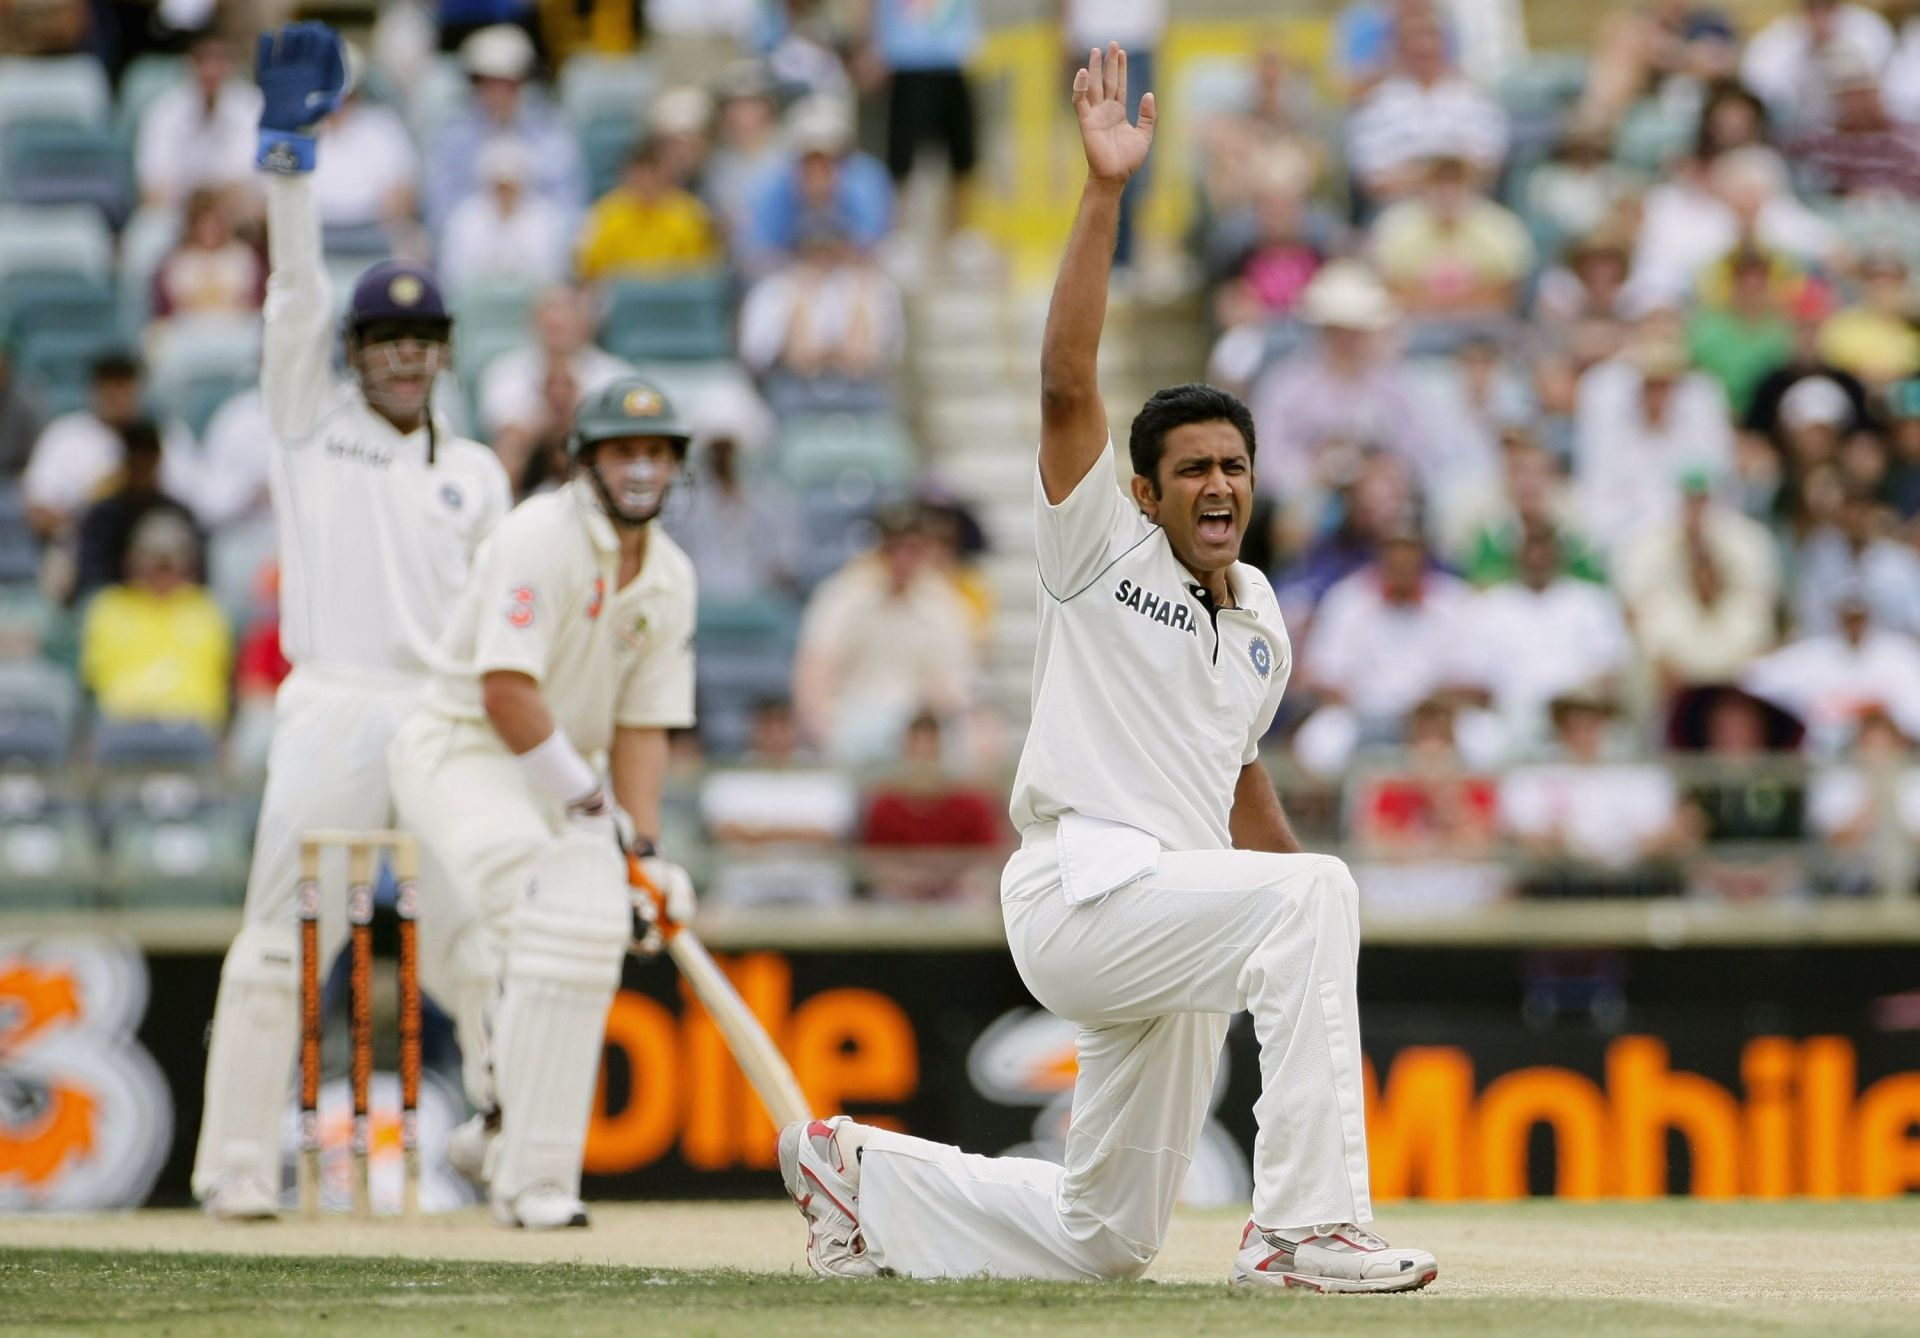 Third Test - Australia v India: Day 4 (Image: Getty)